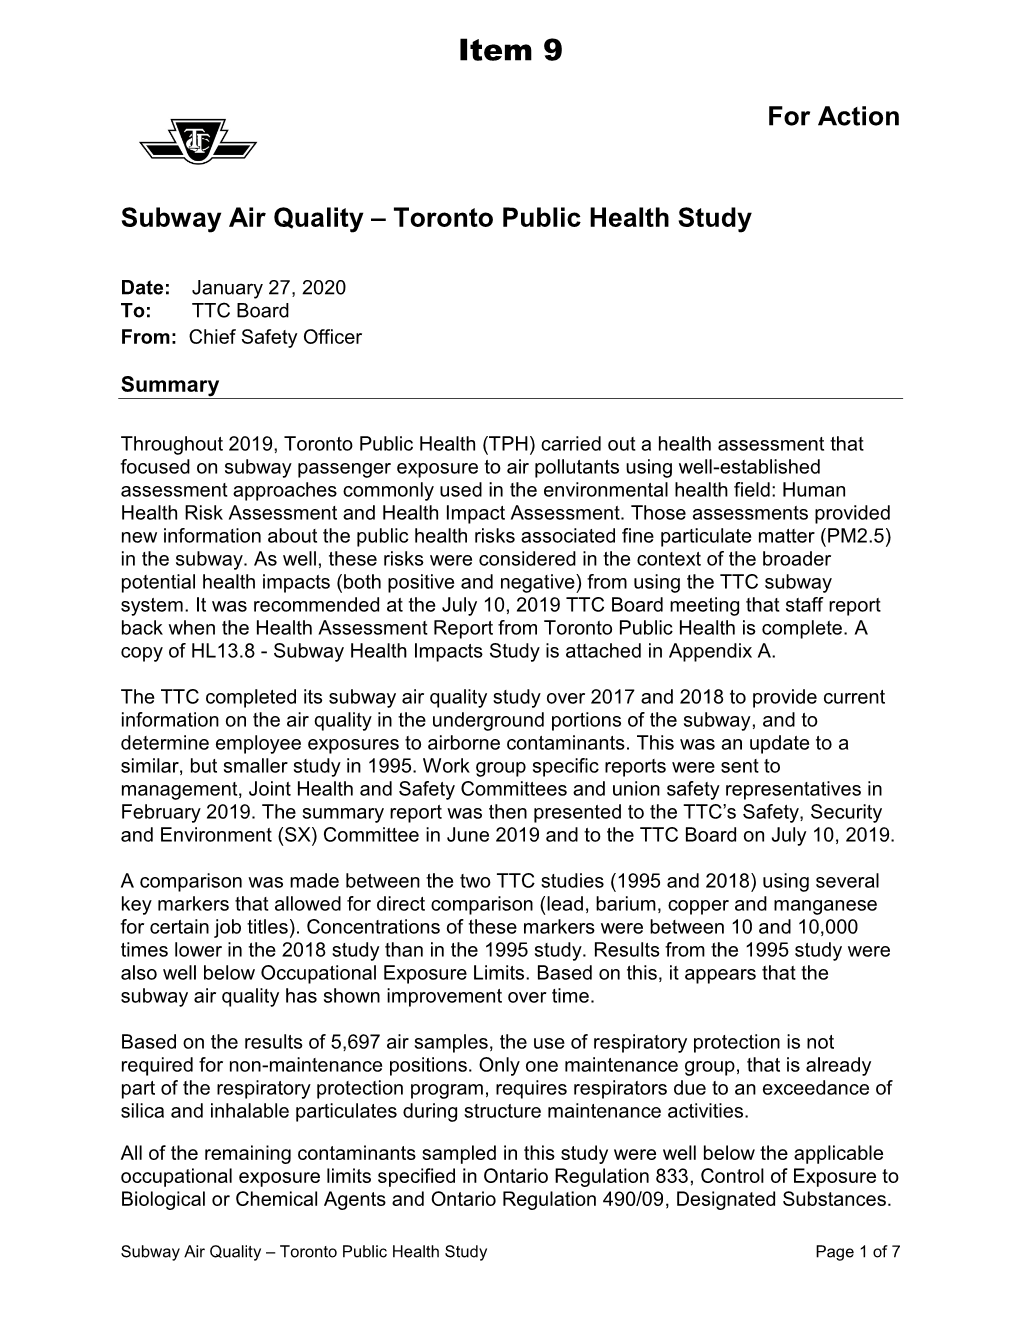 Subway Air Quality – Toronto Public Health Study